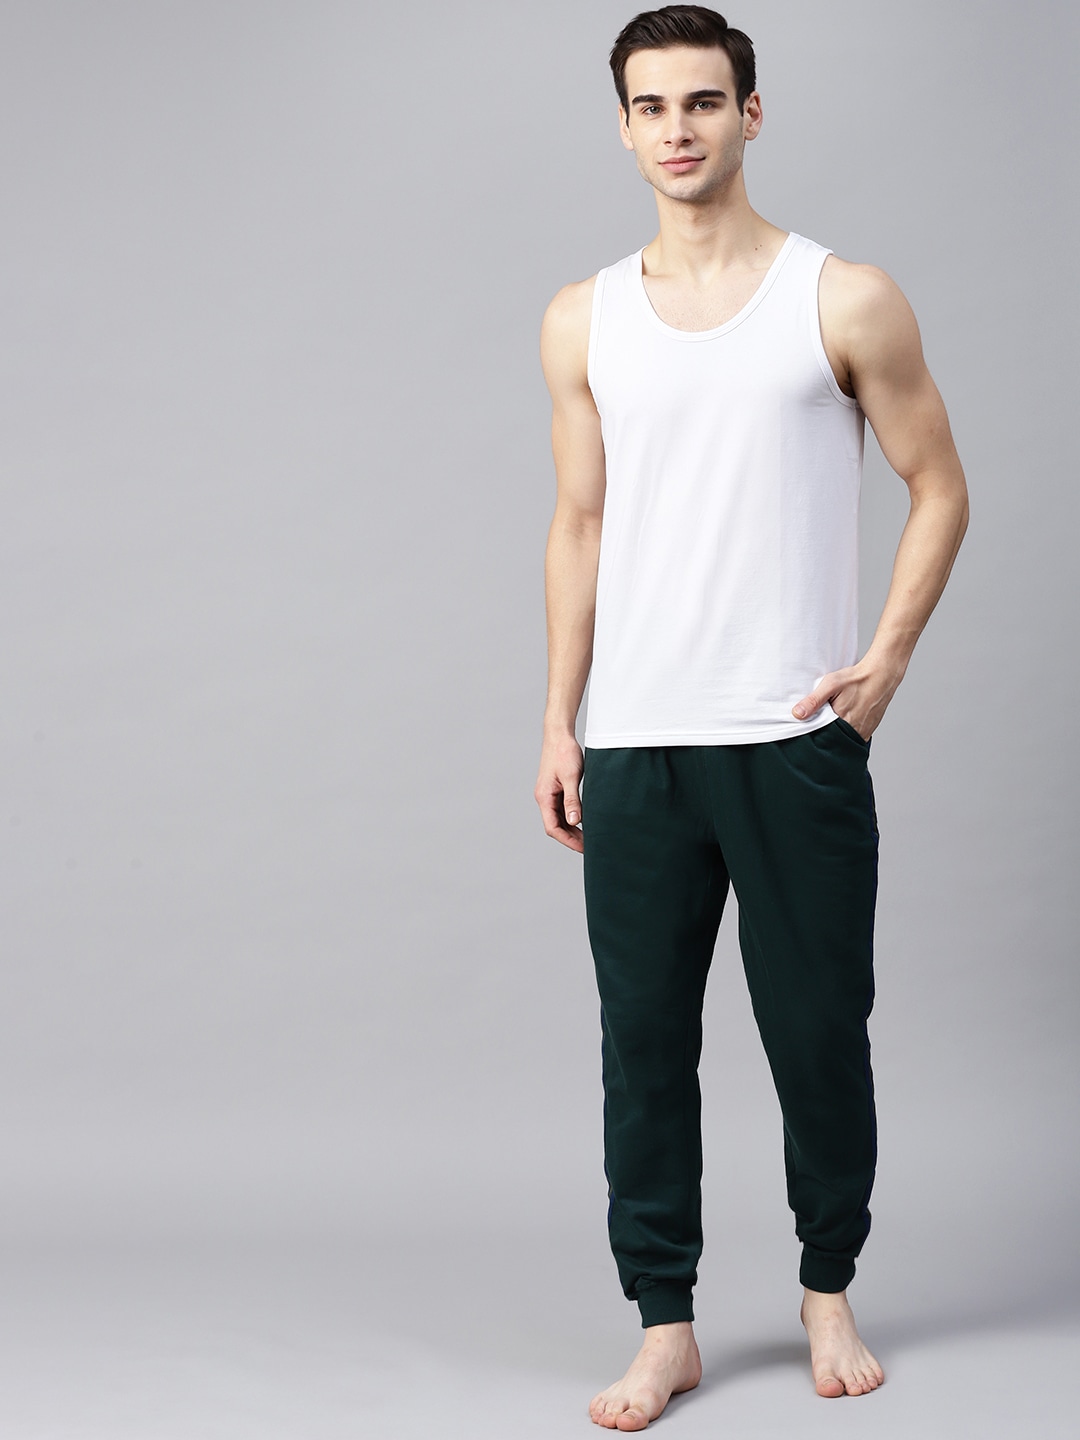 Clothing Innerwear Vests | Marks & Spencer Men Pack of 3 White Solid Innerwear Vests - GS17398